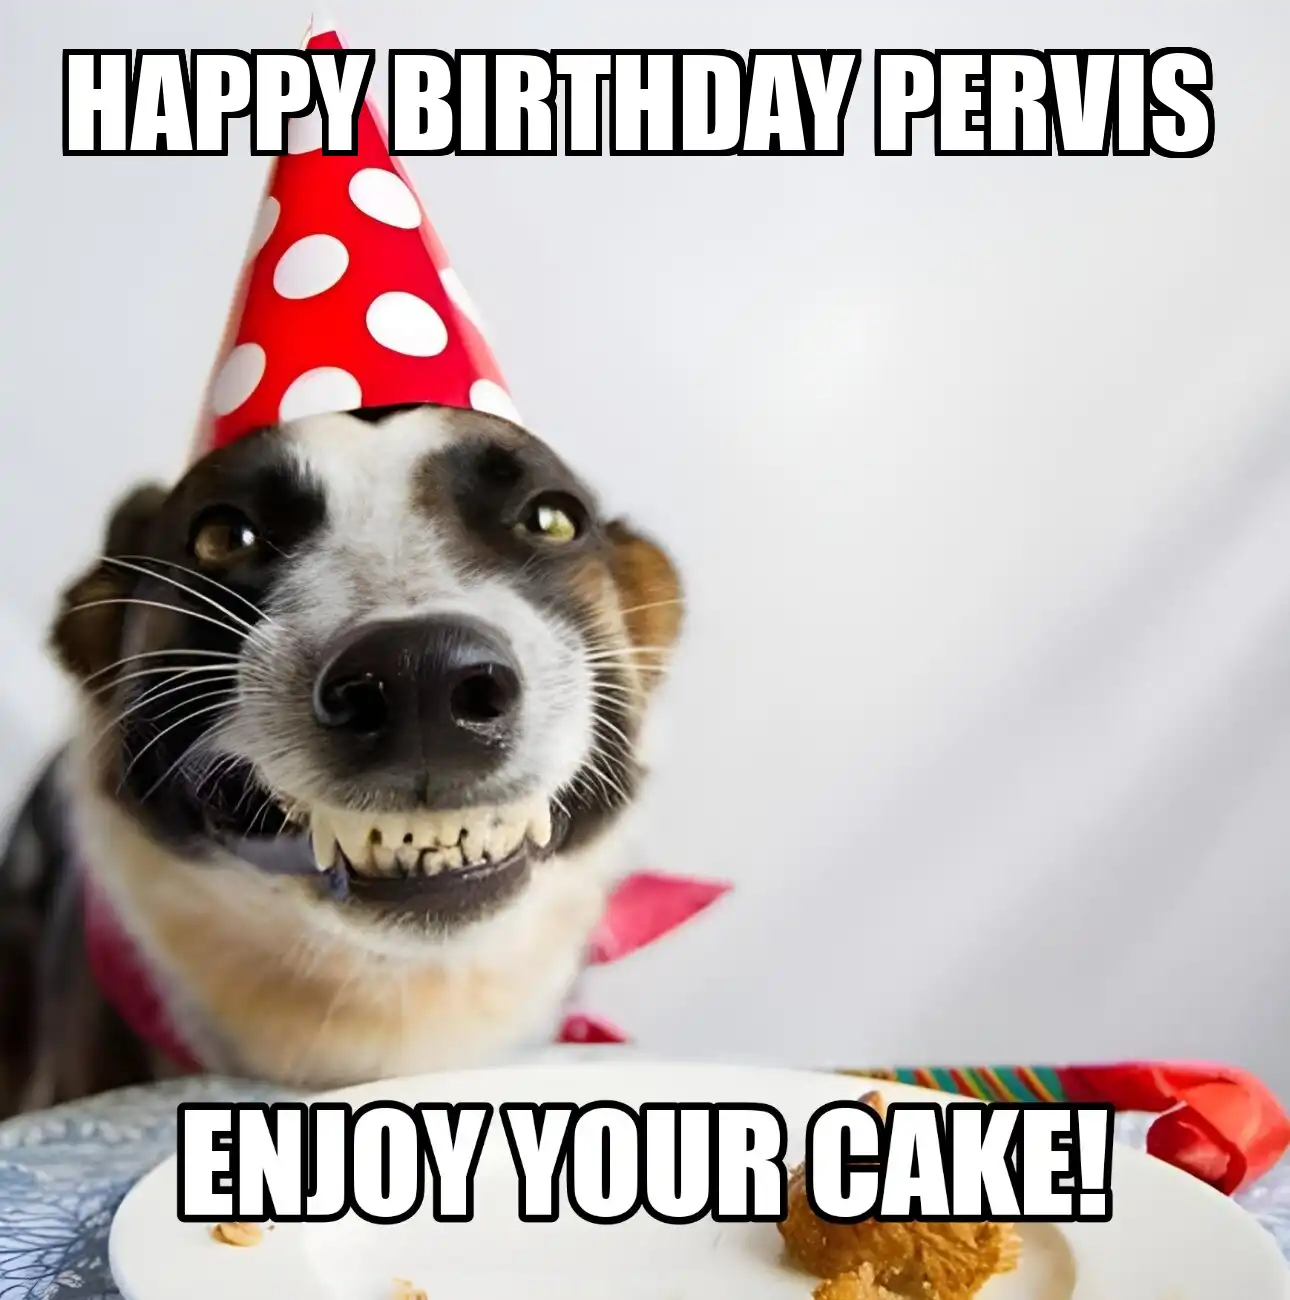 Happy Birthday Pervis Enjoy Your Cake Dog Meme